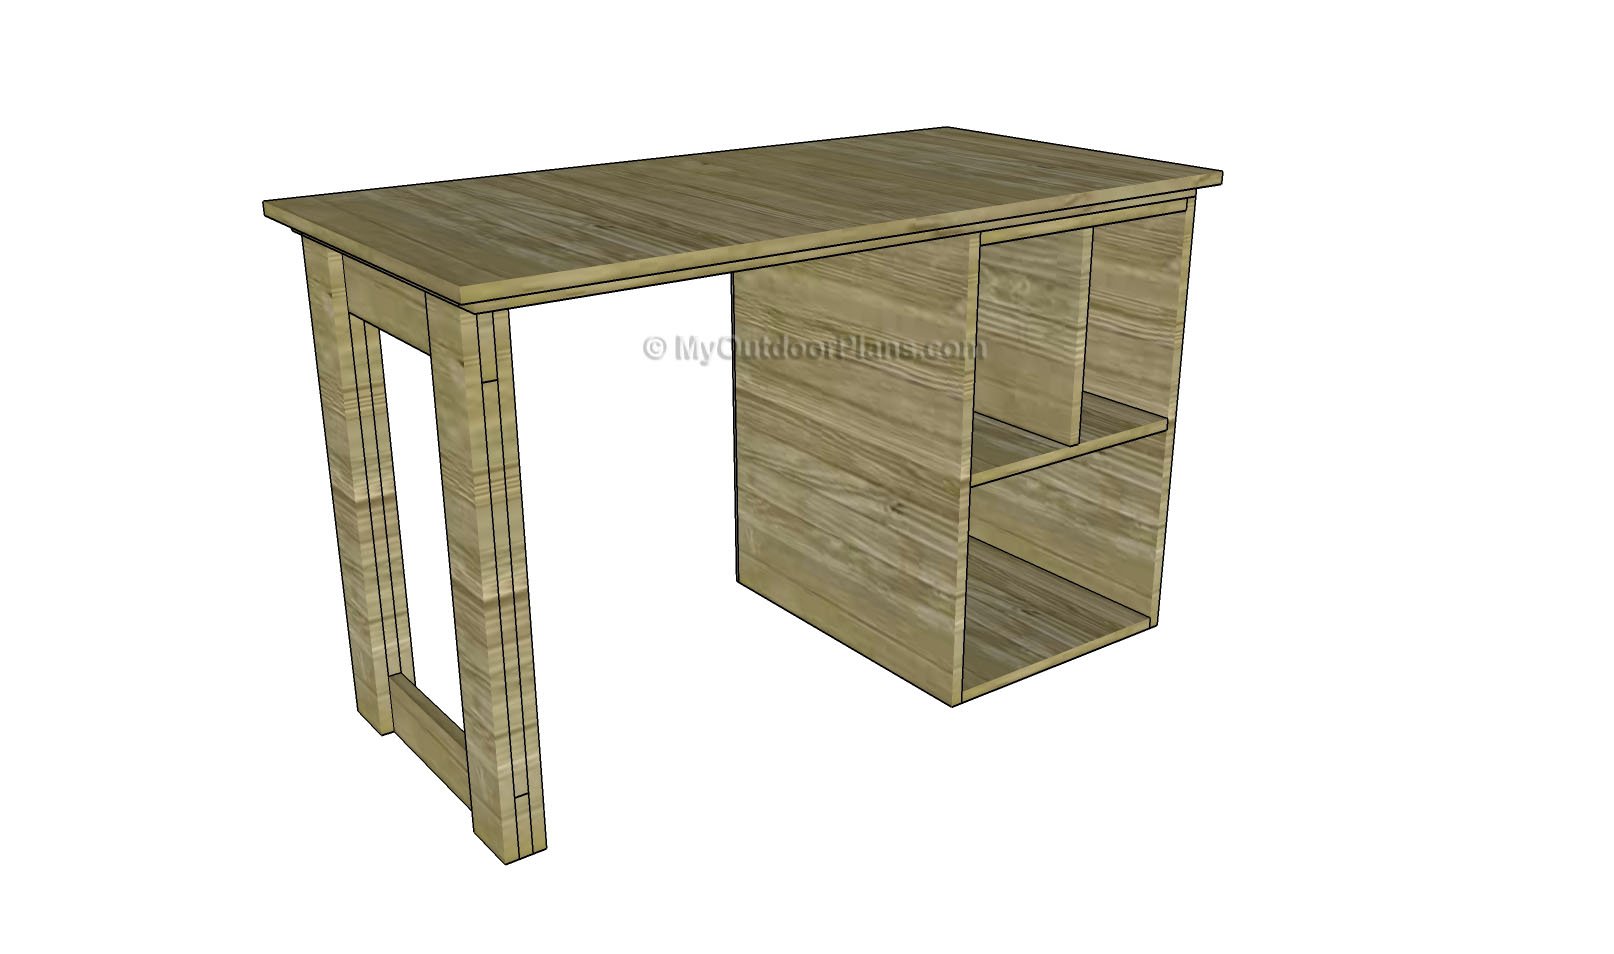 Wood Desk Plans Free | Beginner Woodworking Project